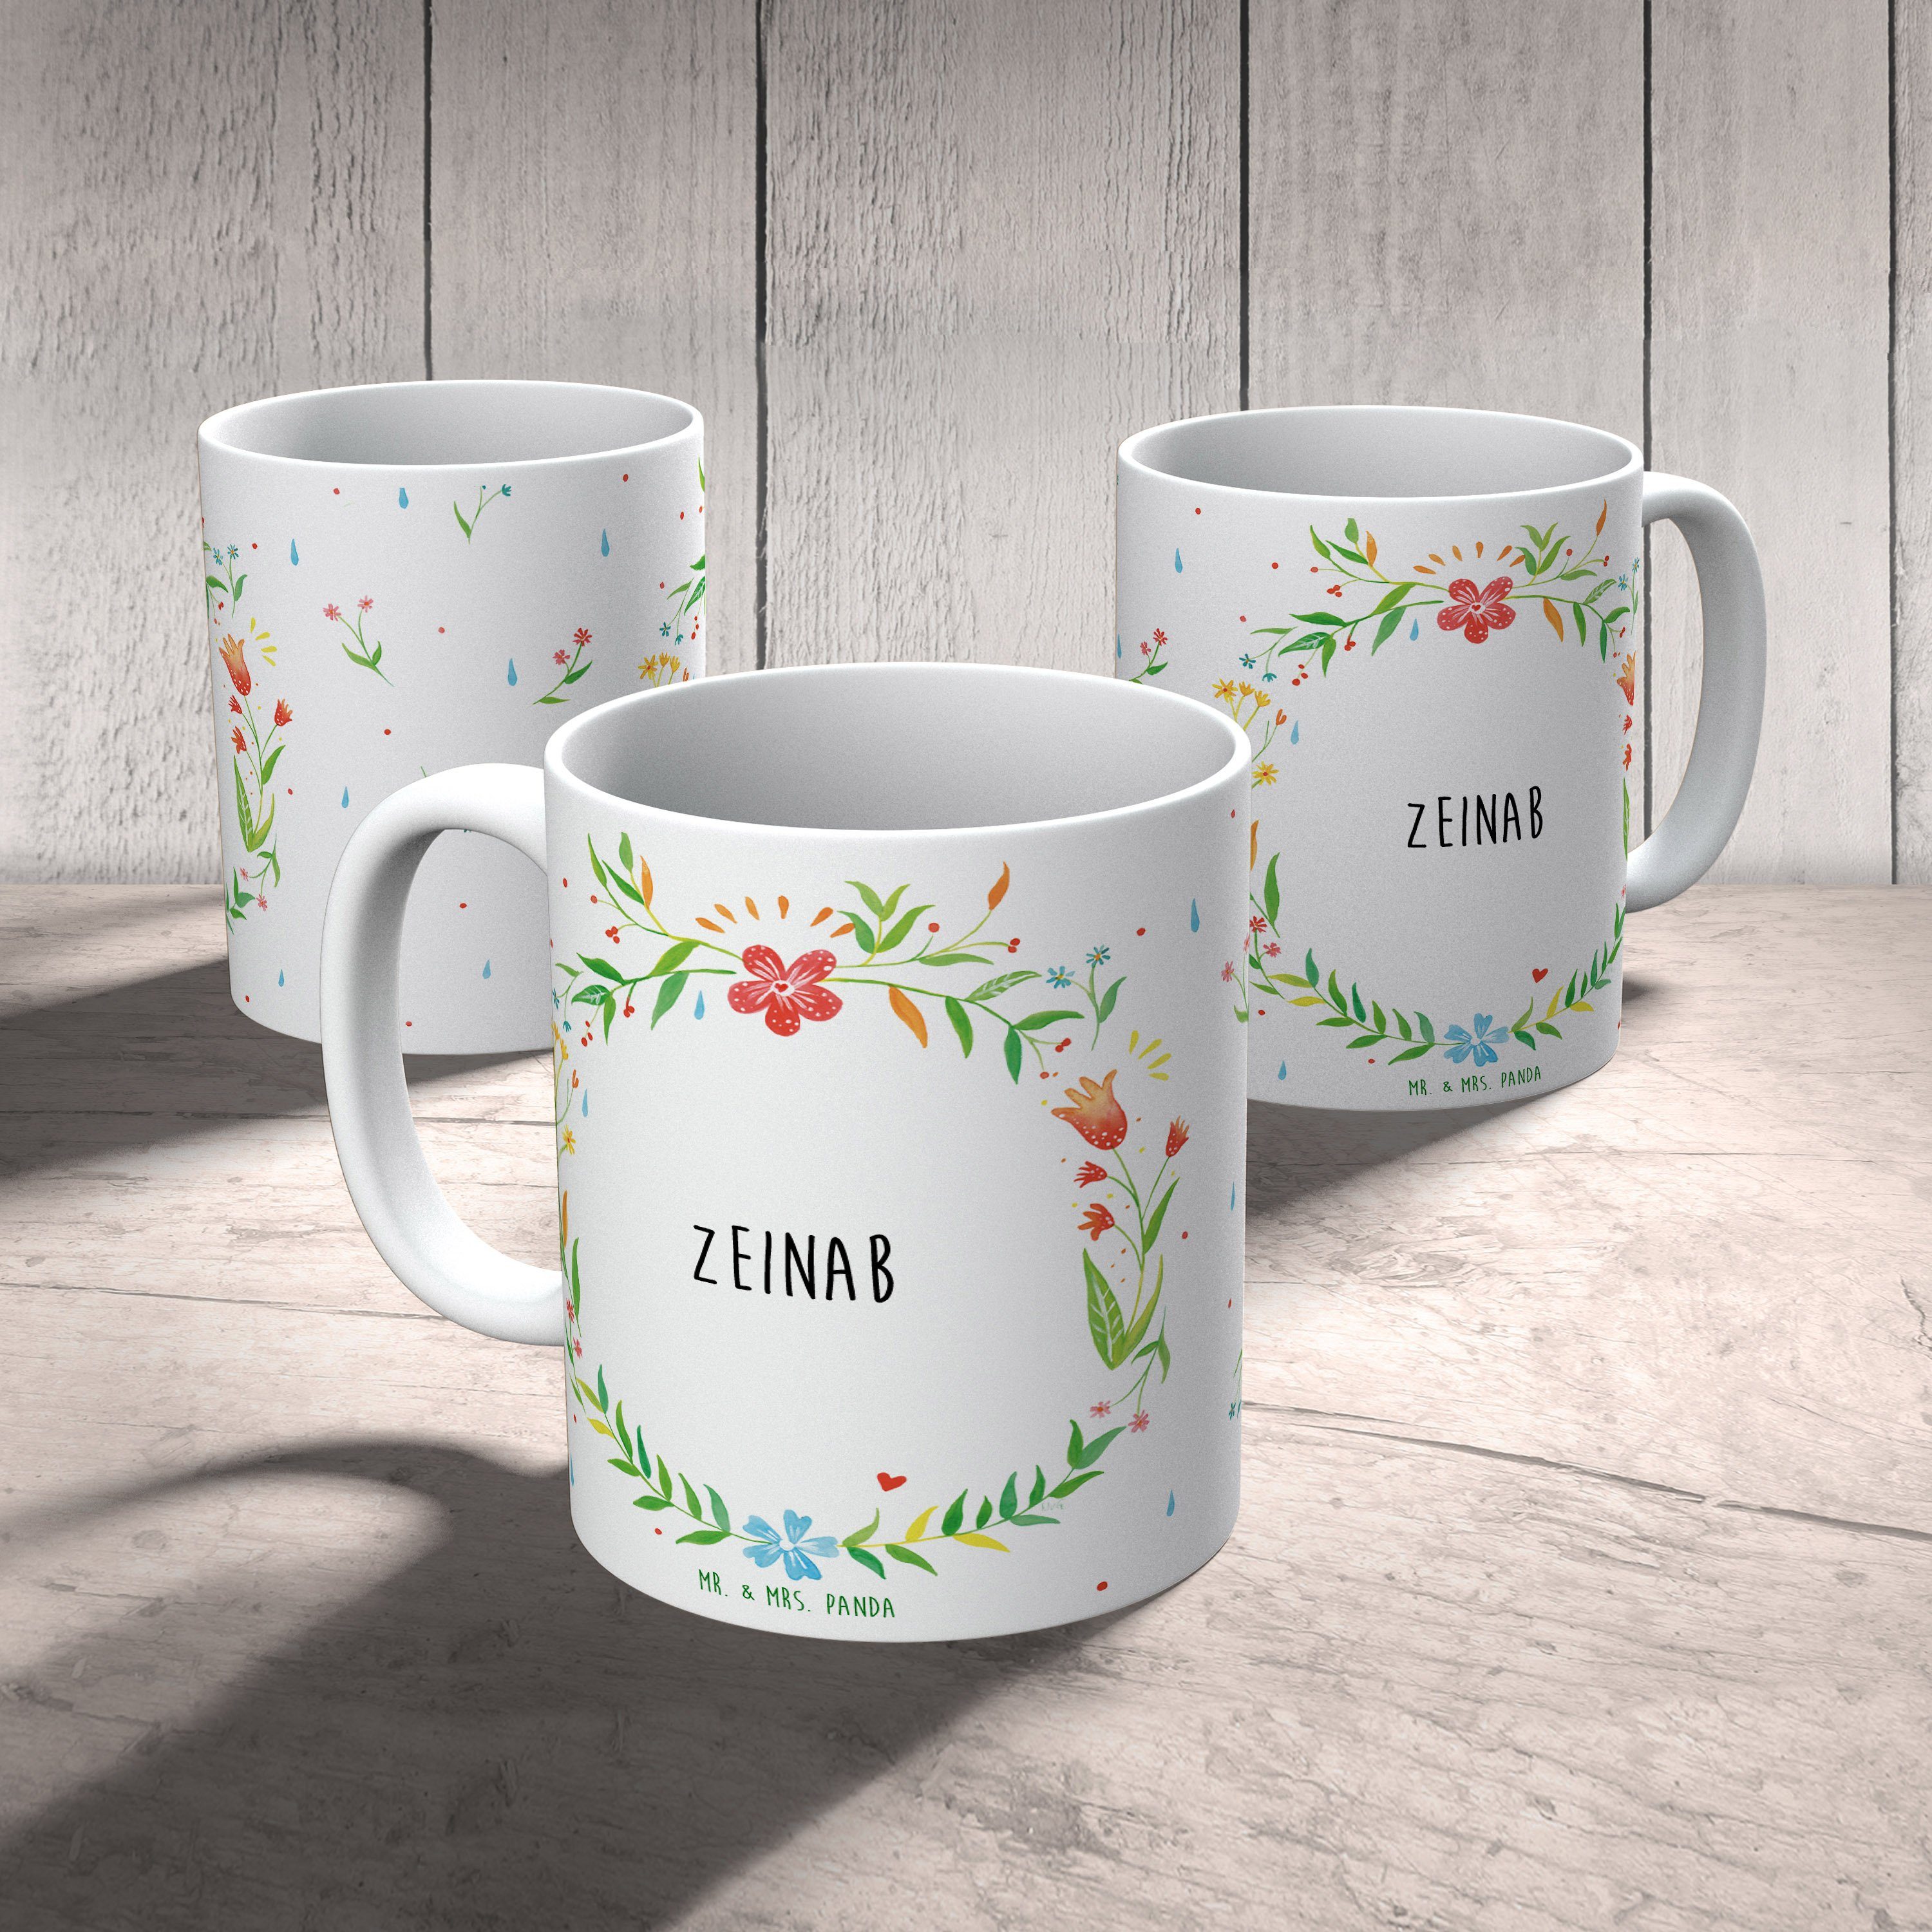 Mr. & Mrs. - Kaffeeta, Keramik Panda Zeinab Motive, Tasse Tasse Keramiktasse, Kaffeebecher, Geschenk